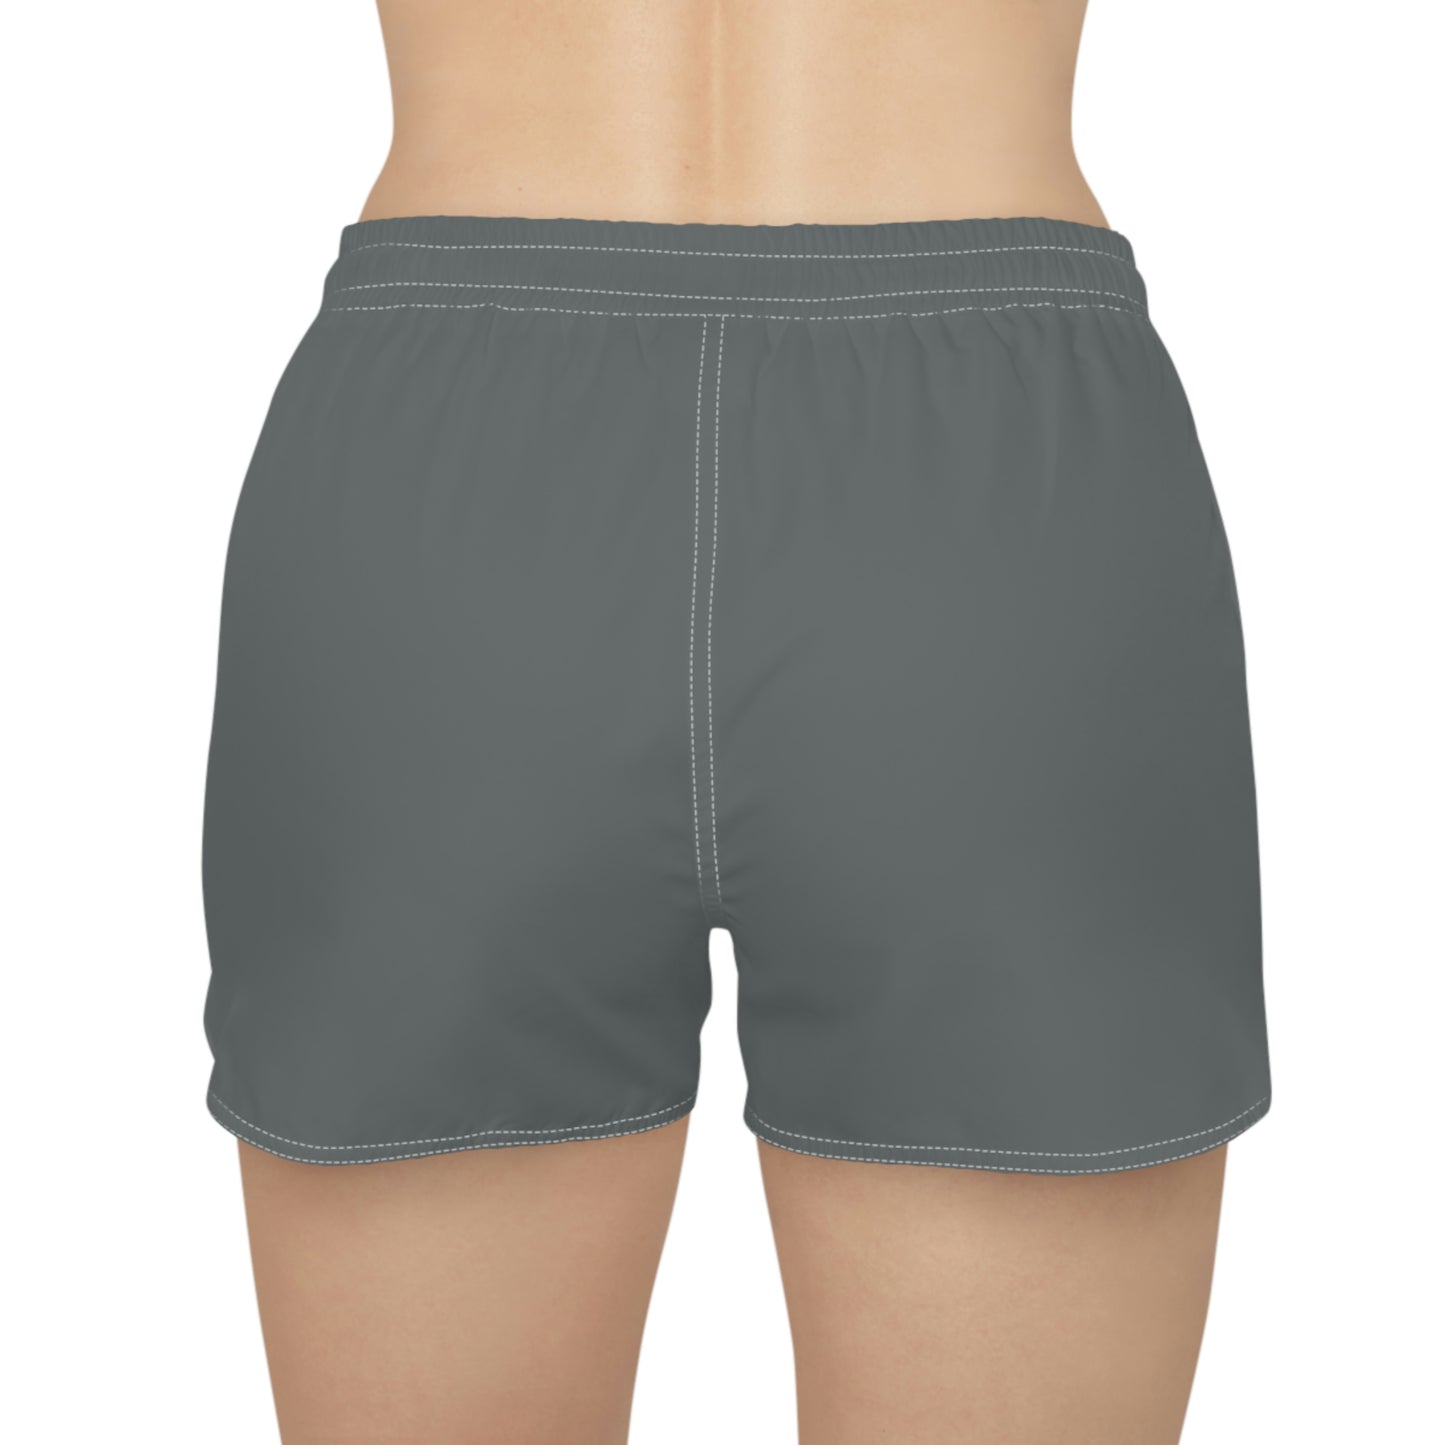 Women's FTF Shorts Grey/Grey